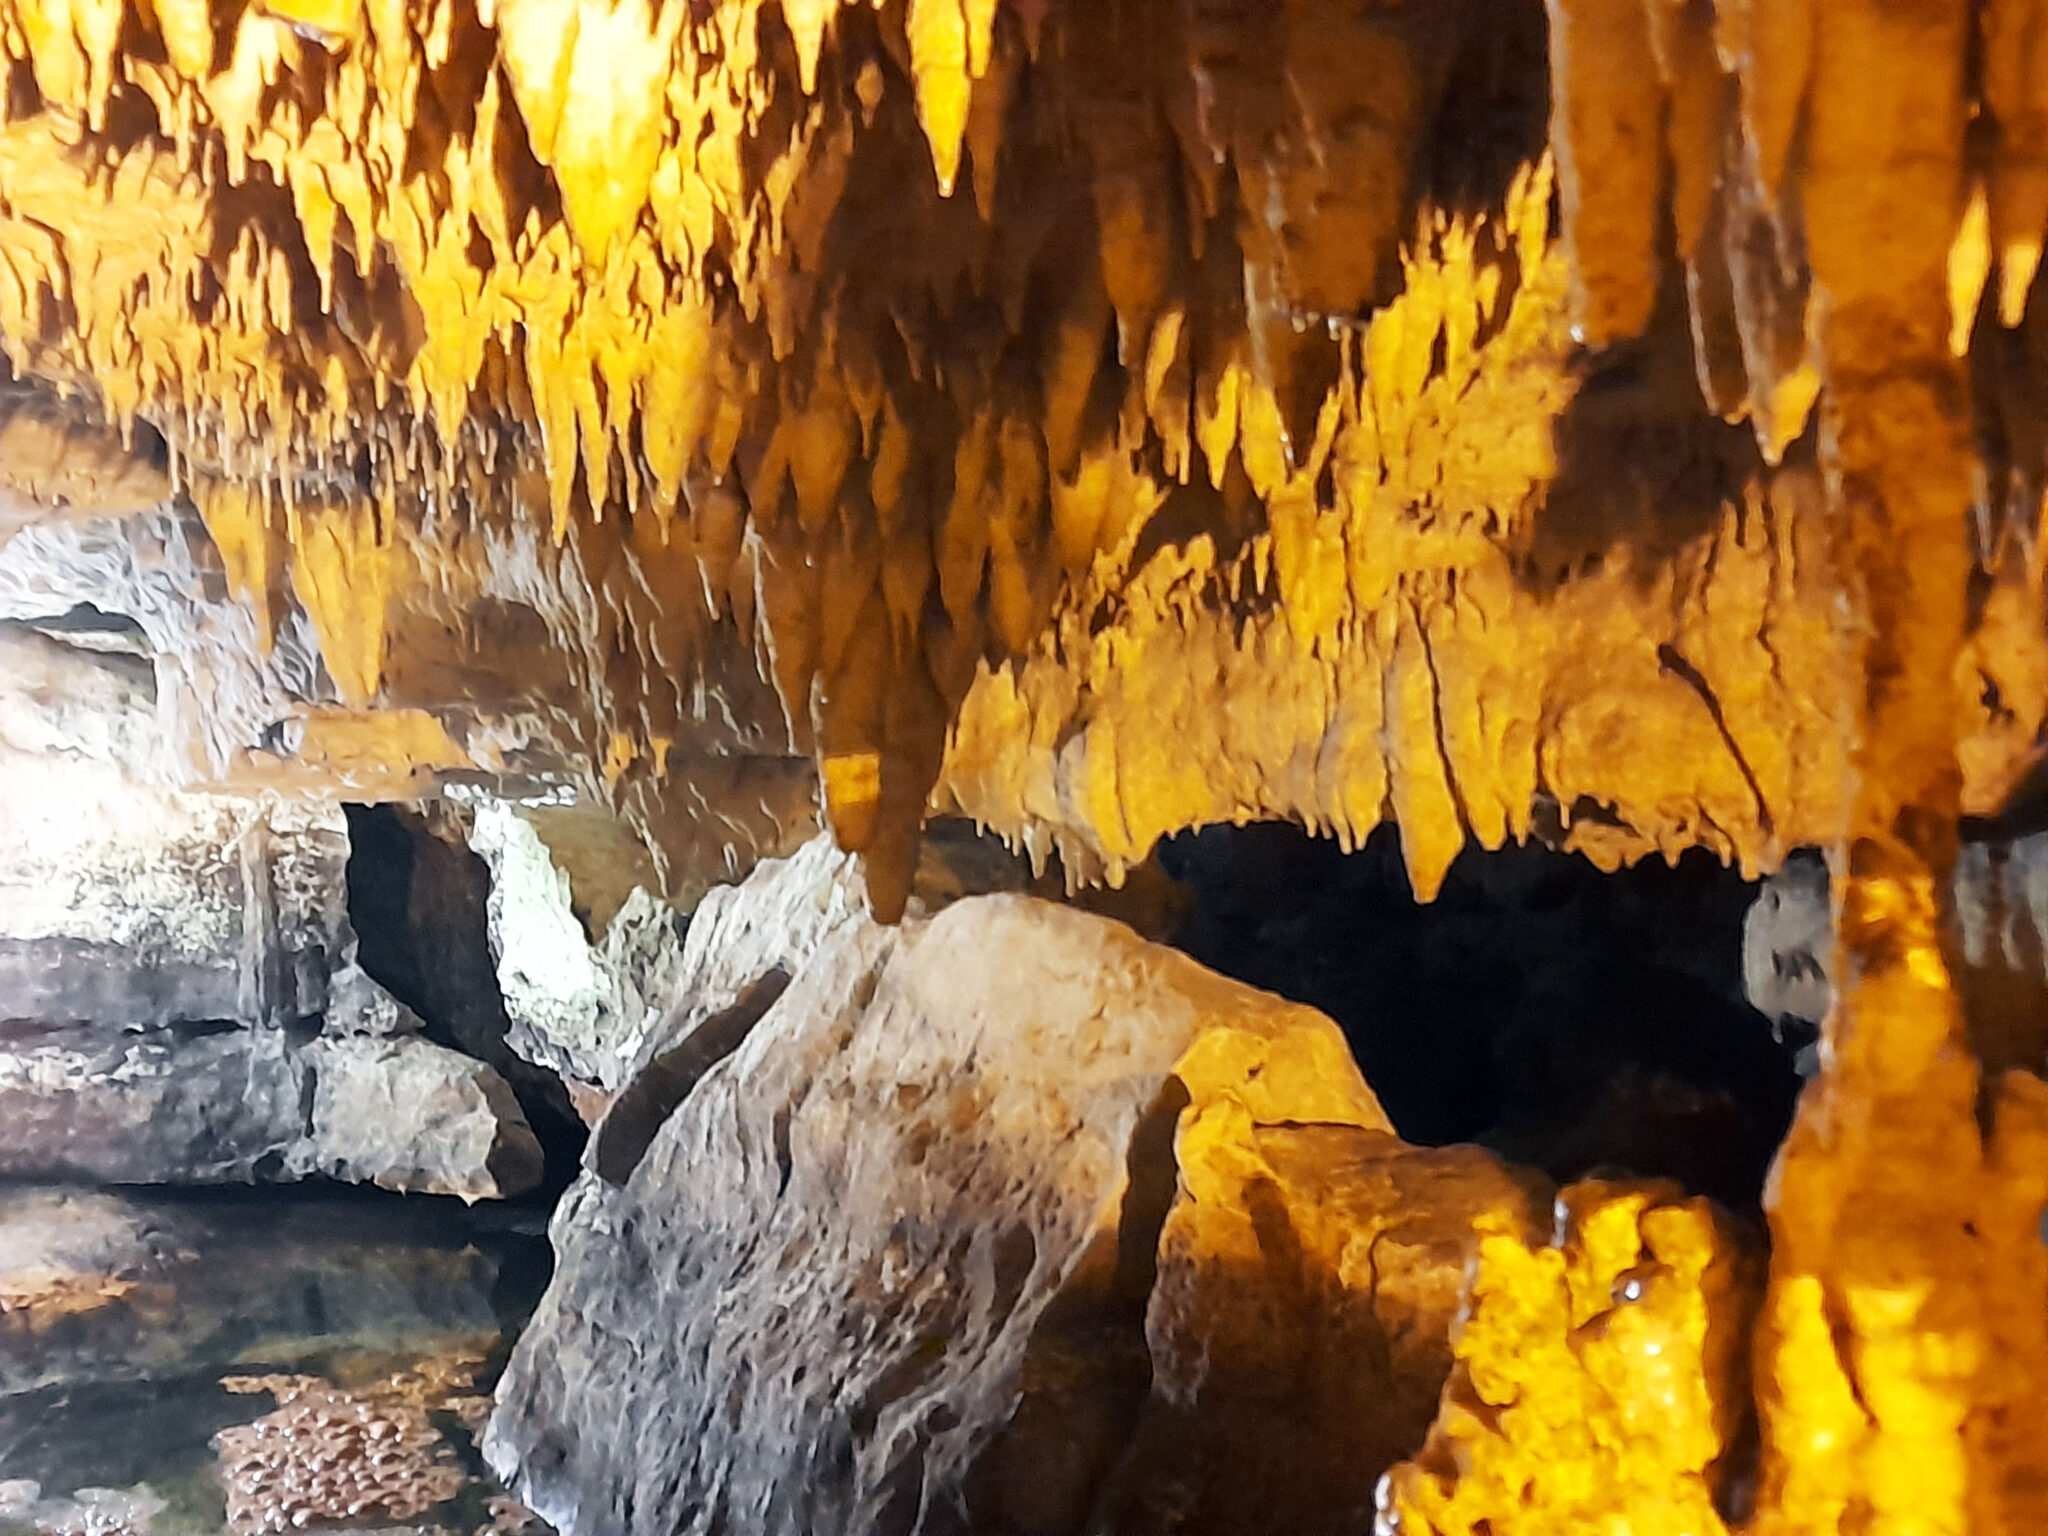 To σπήλαιο εντυπωσιάζει για τον σταλακτατικό του διάκοσμο/Photo : Παναγιώτης Σαββίδης